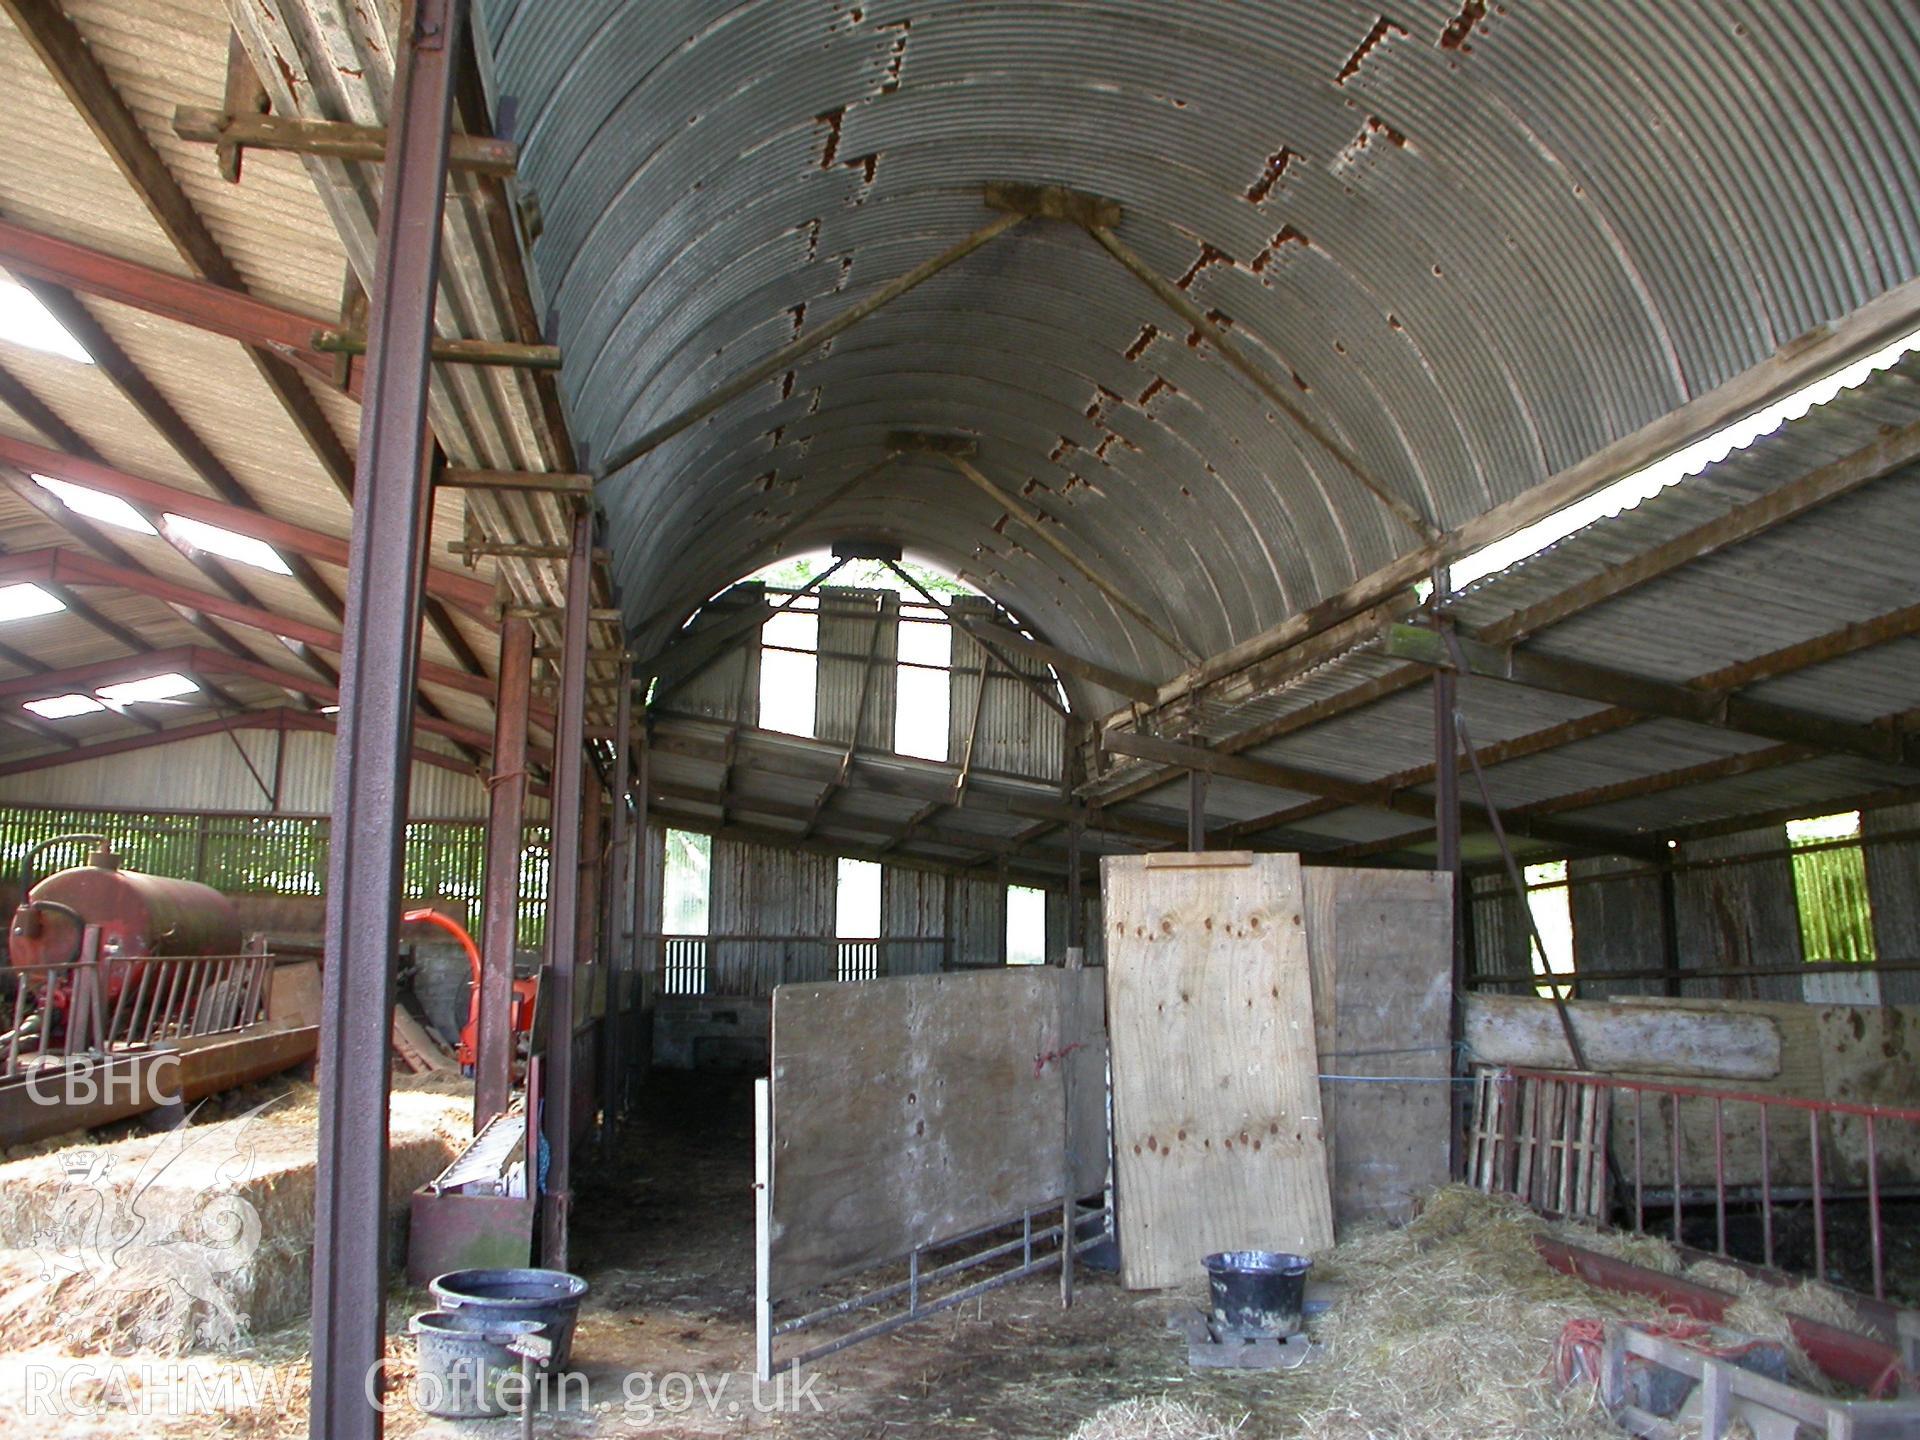 Dutch barn, interior.